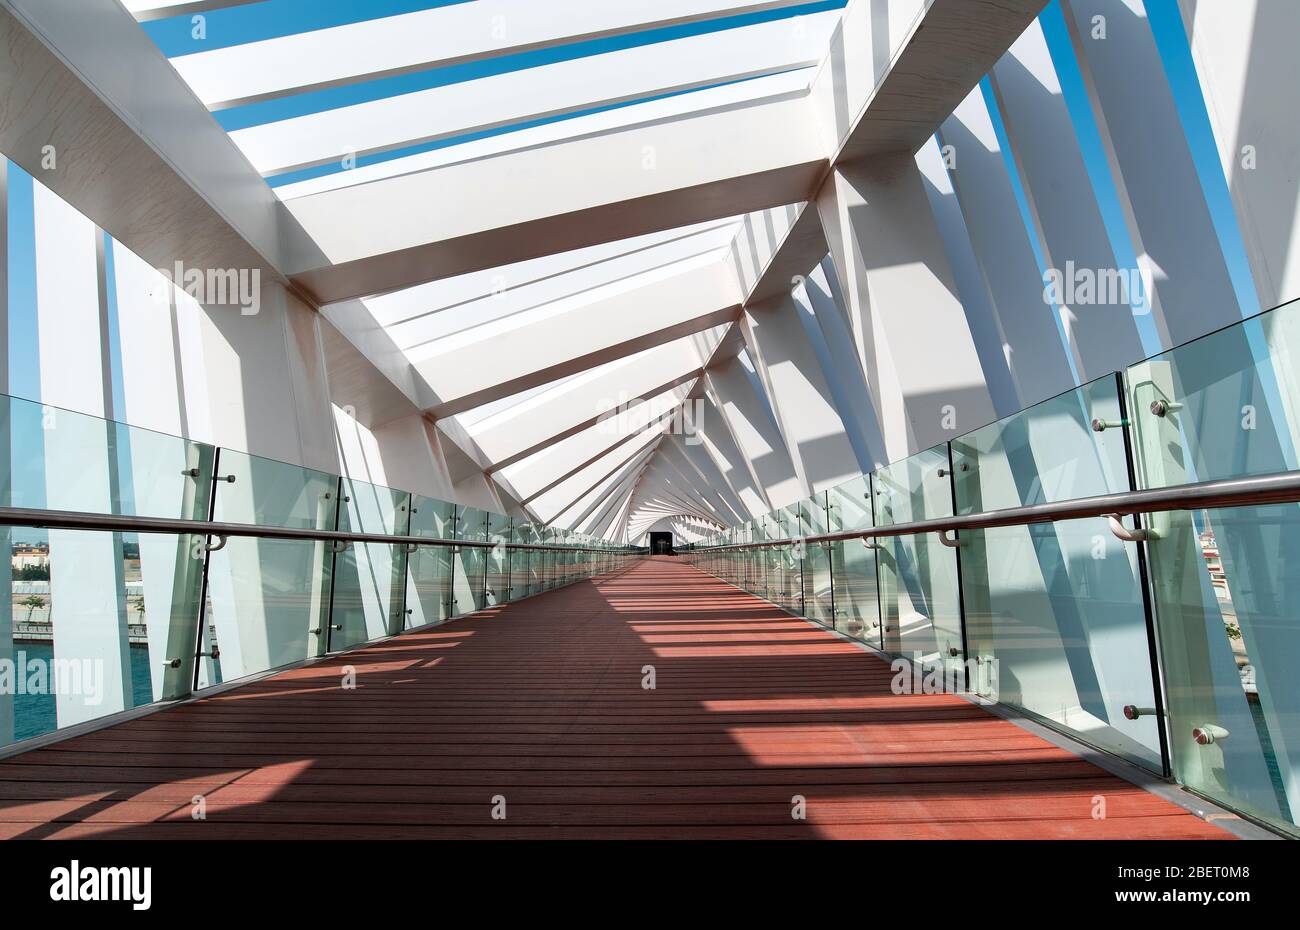 Dubai Water canal footbridge pedestrian bridge interior in the UAE Stock Photo